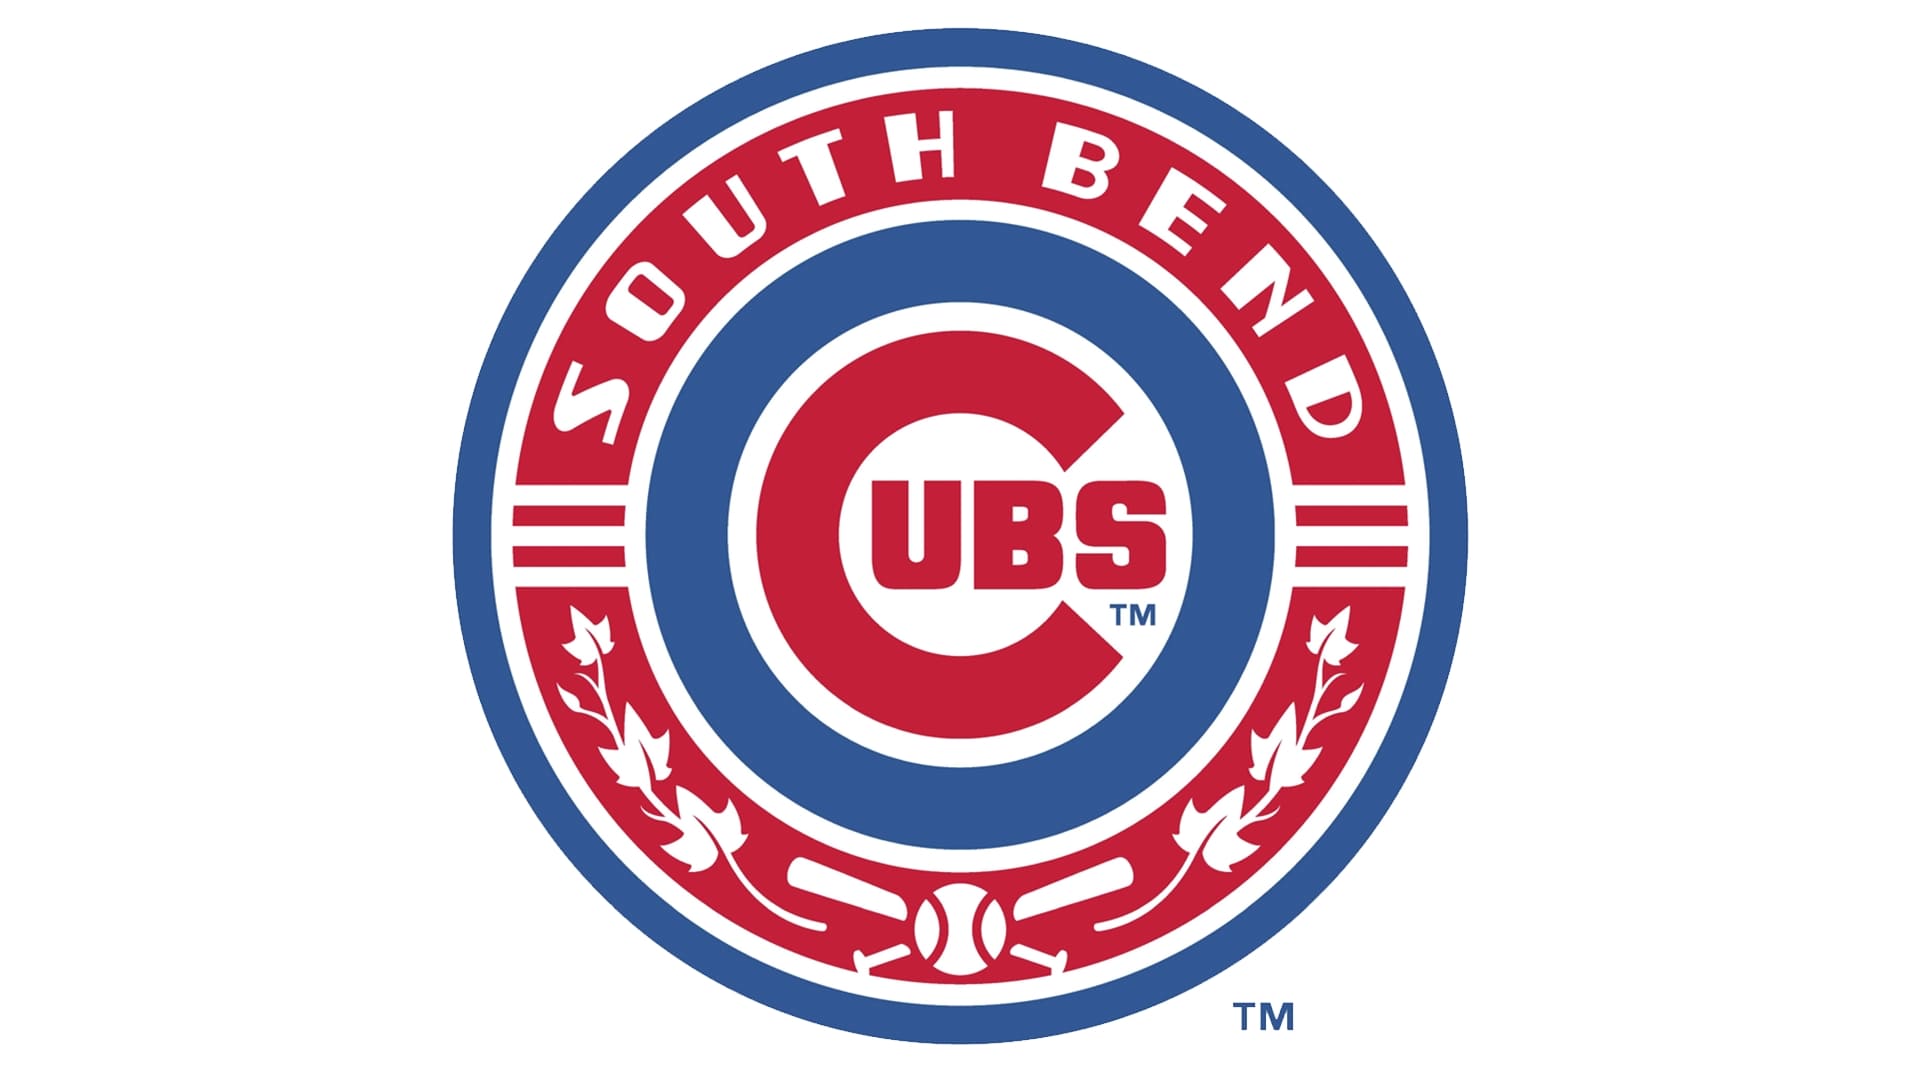 South Bend Cubs unveil logo, branding